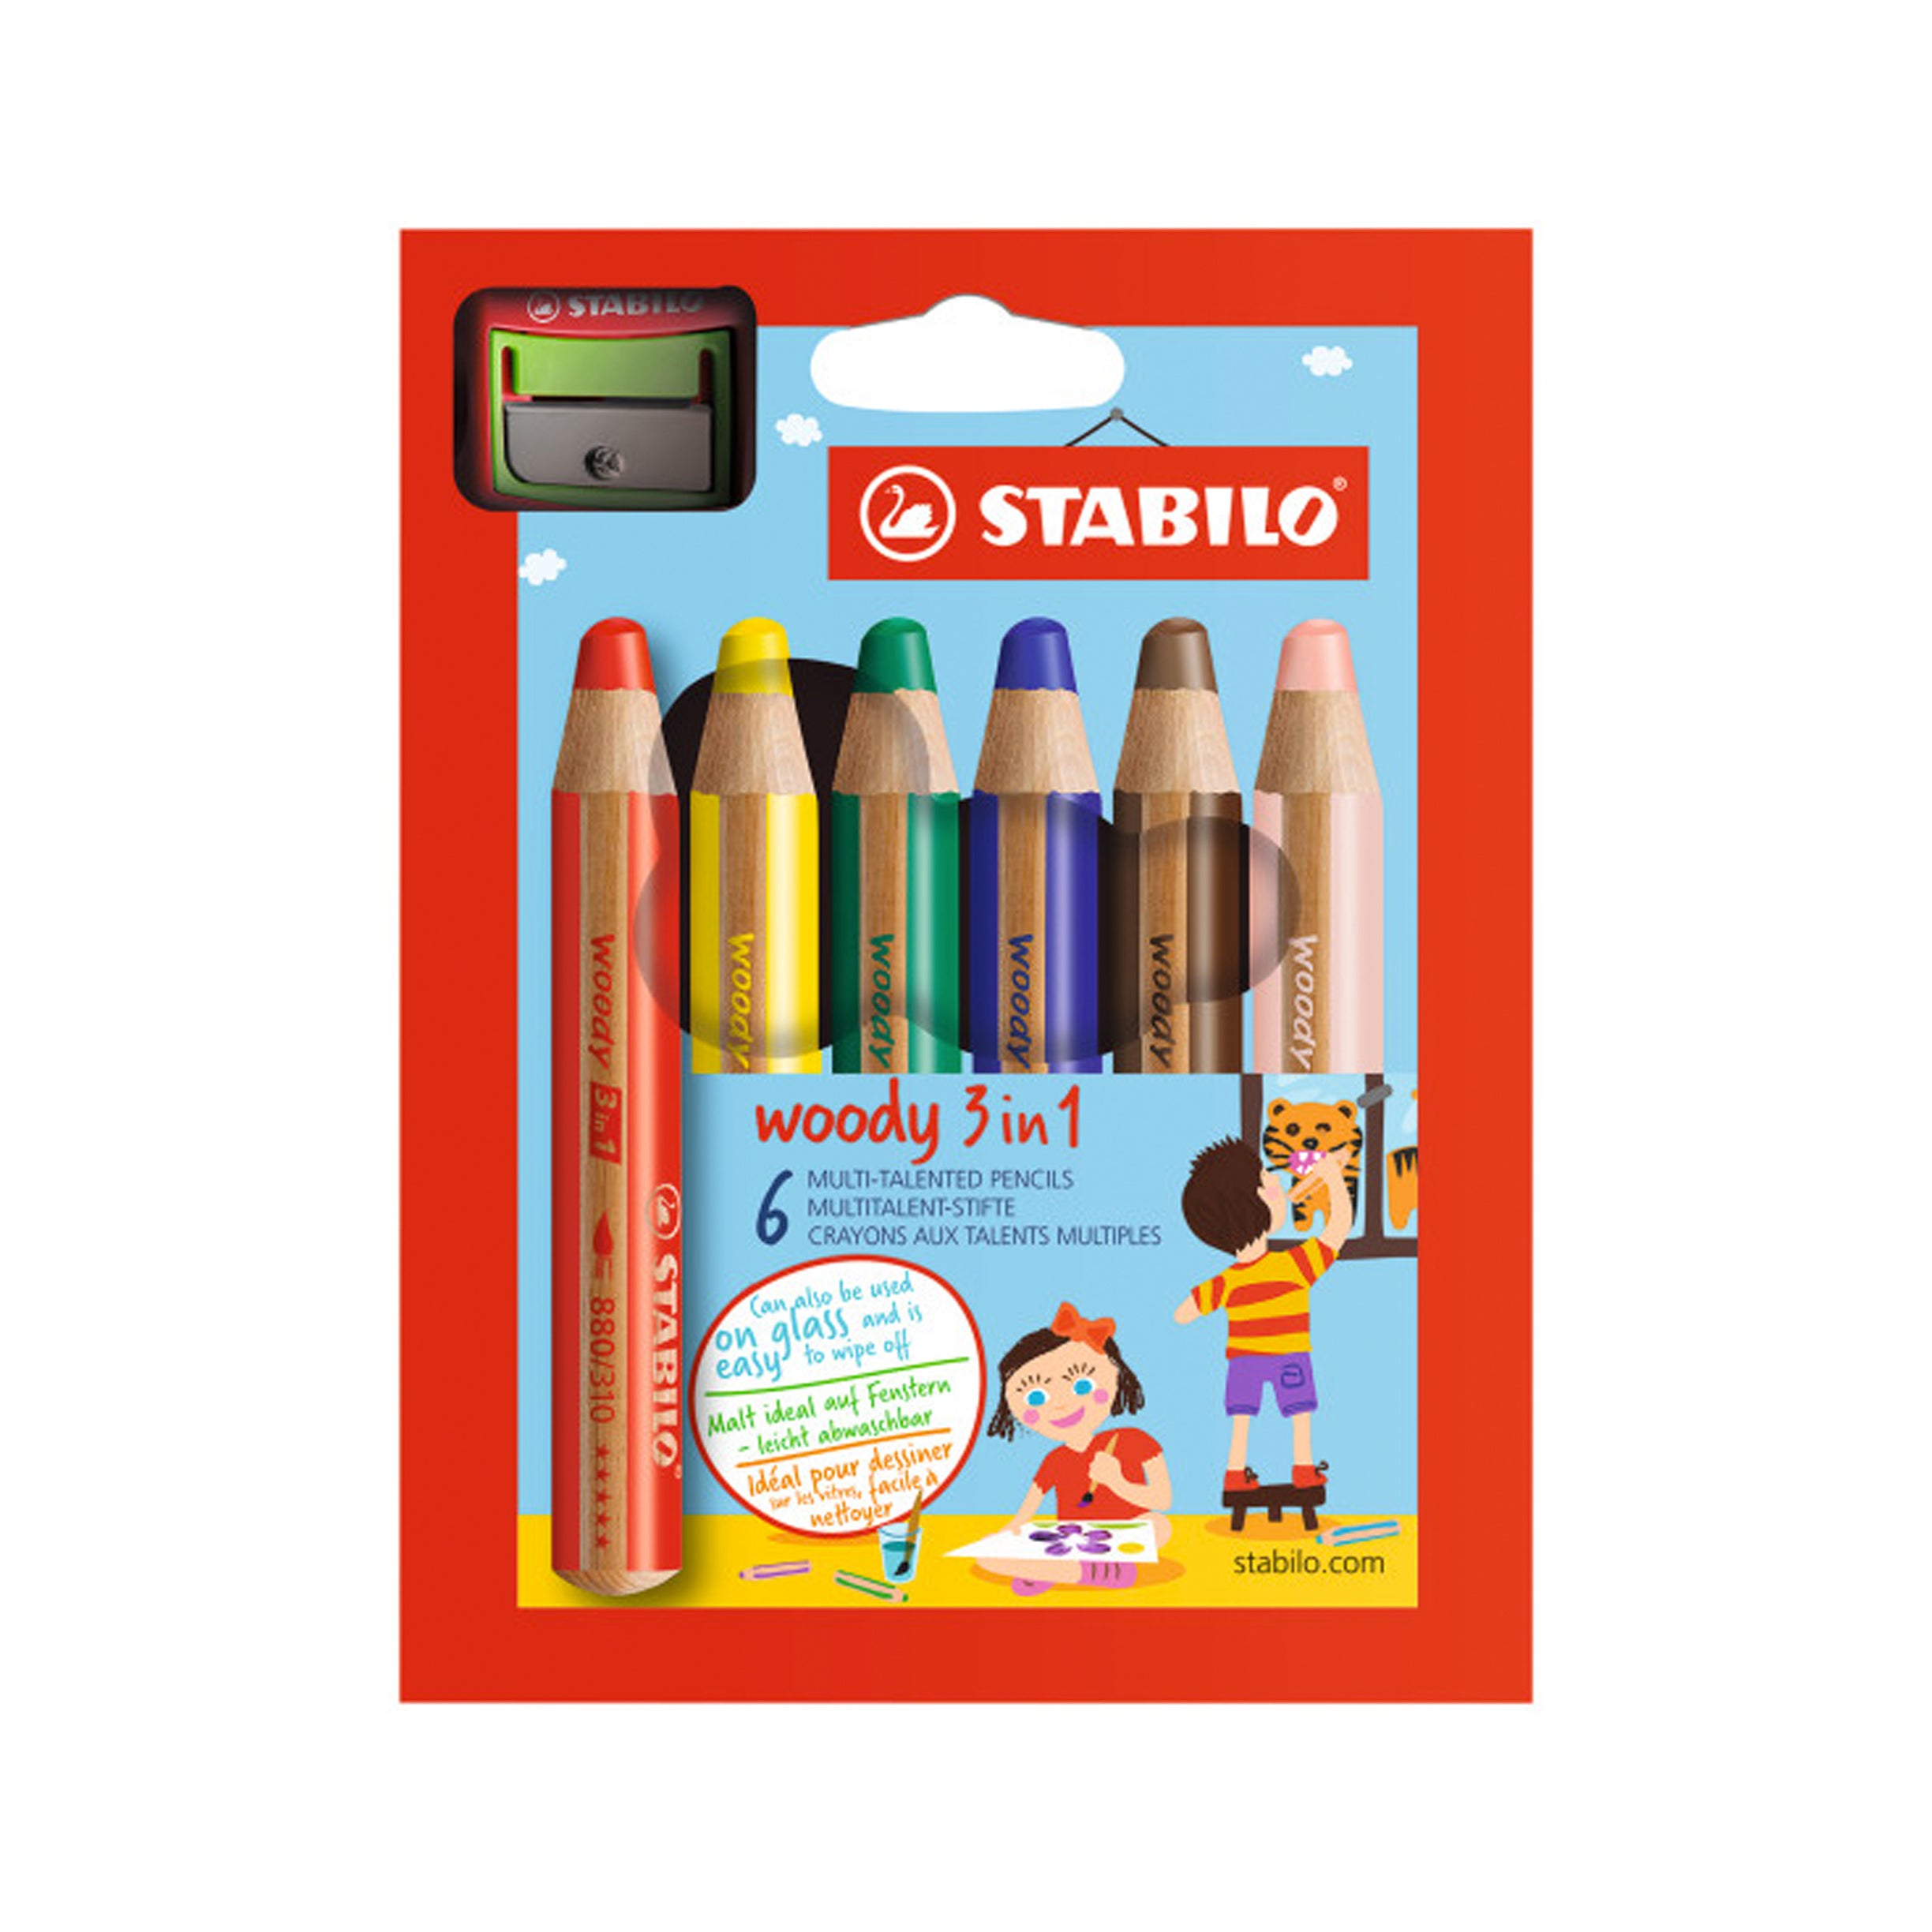 Stabilo Woody 3-in-1 Pencils, Set of 6